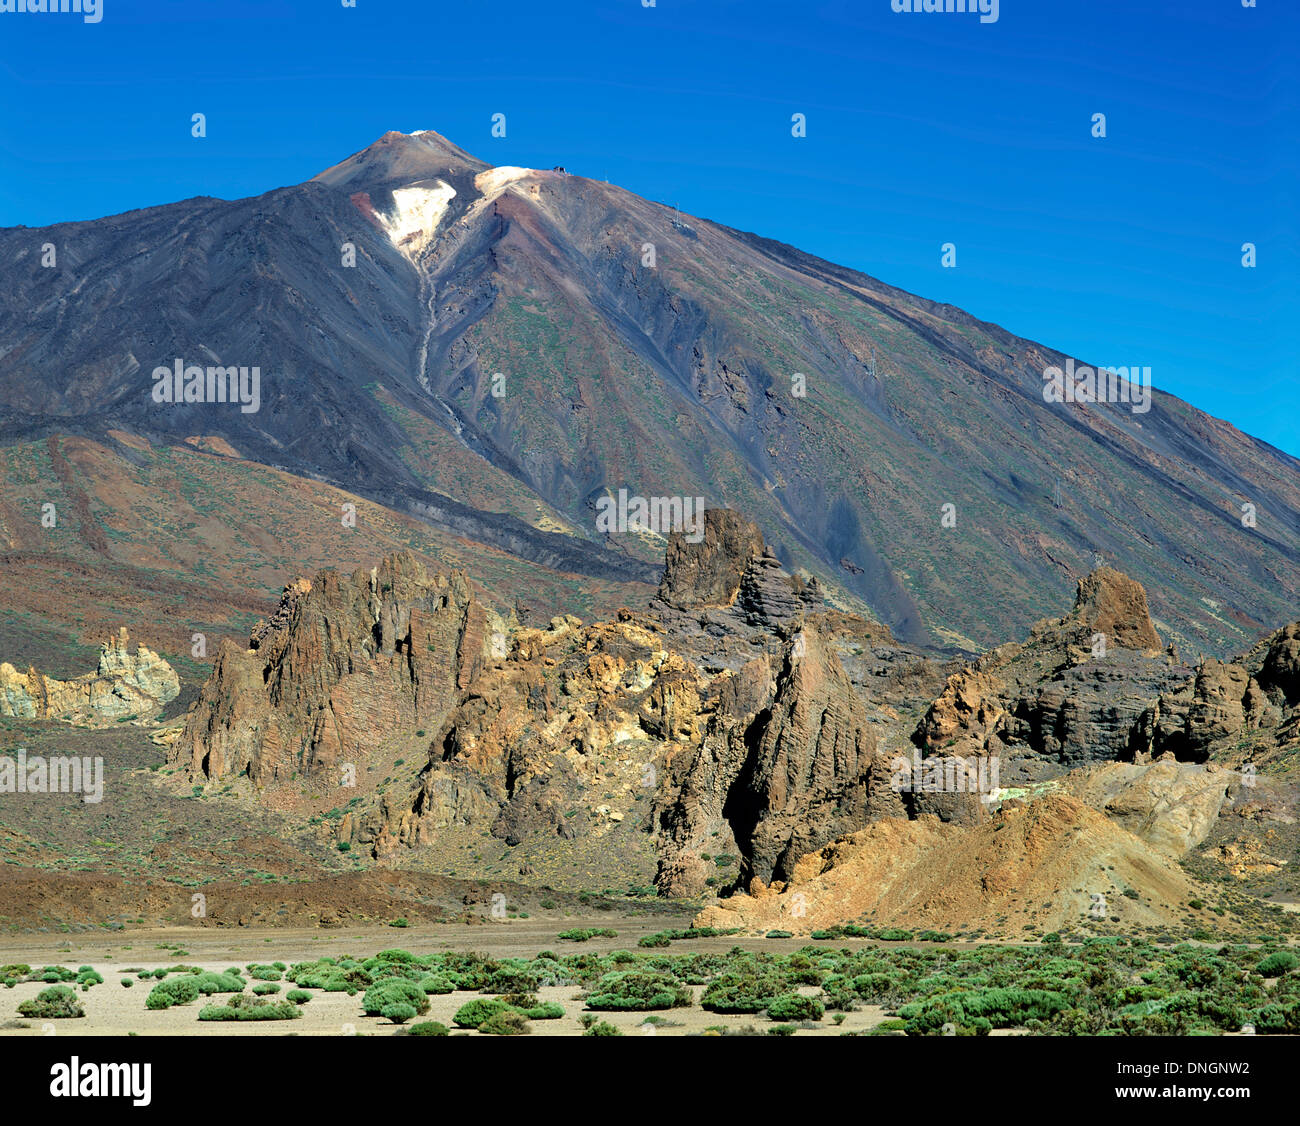 Mount teide caldera las canadas hi-res stock photography and images - Alamy